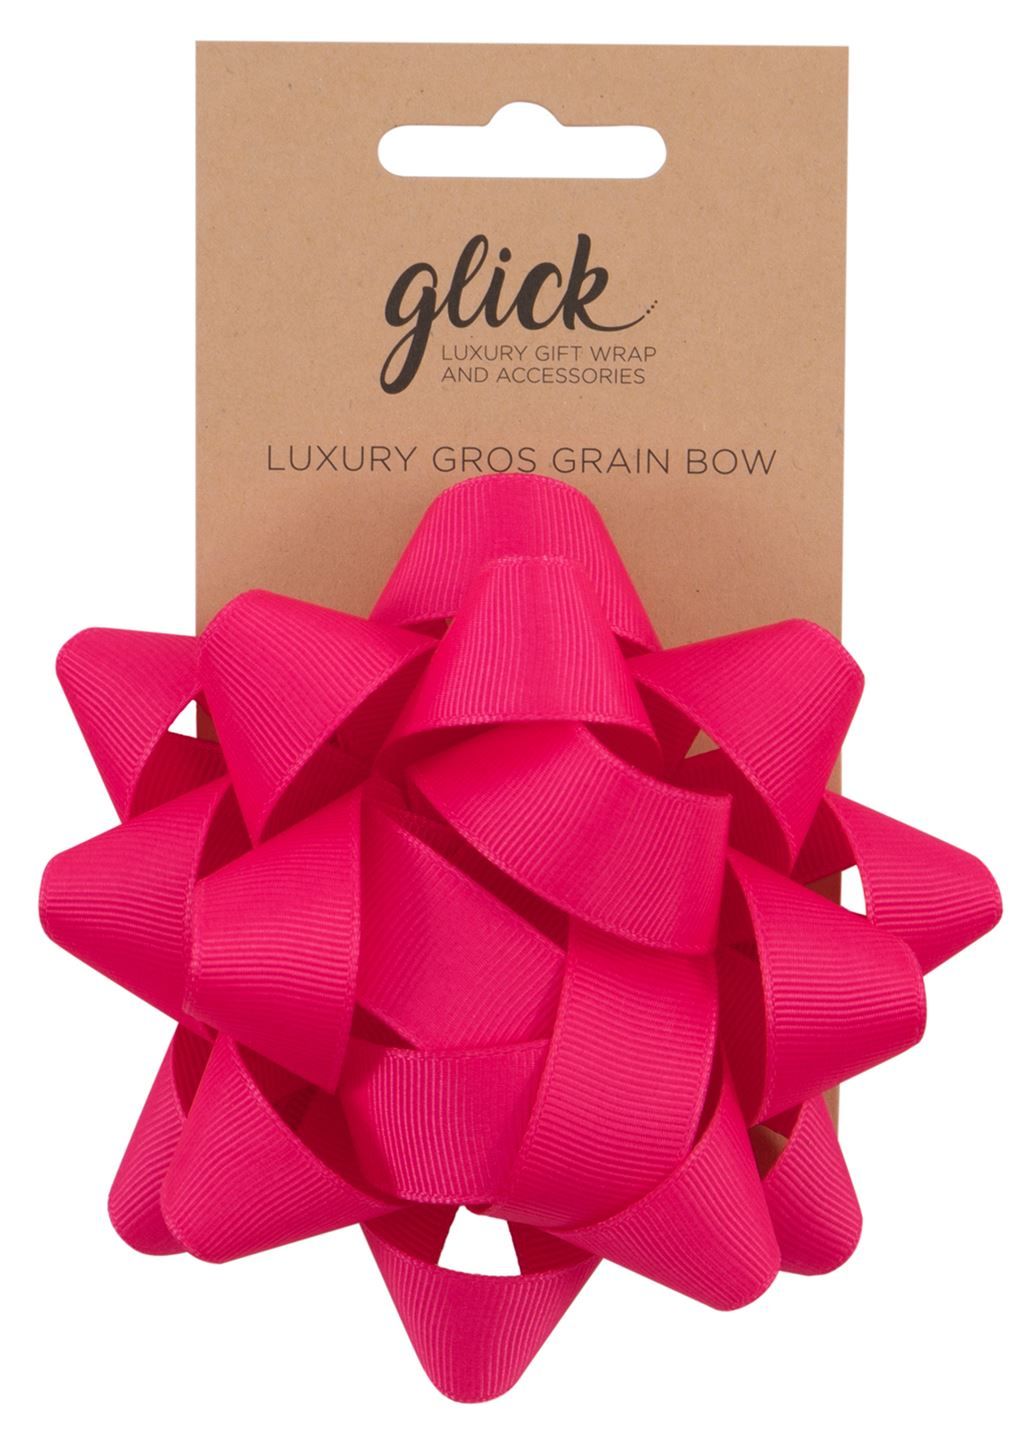 Confetti Bows - HOT PINK - 12CM Grosgrain CONFETTI BOWS - Luxury GIFT Bow -